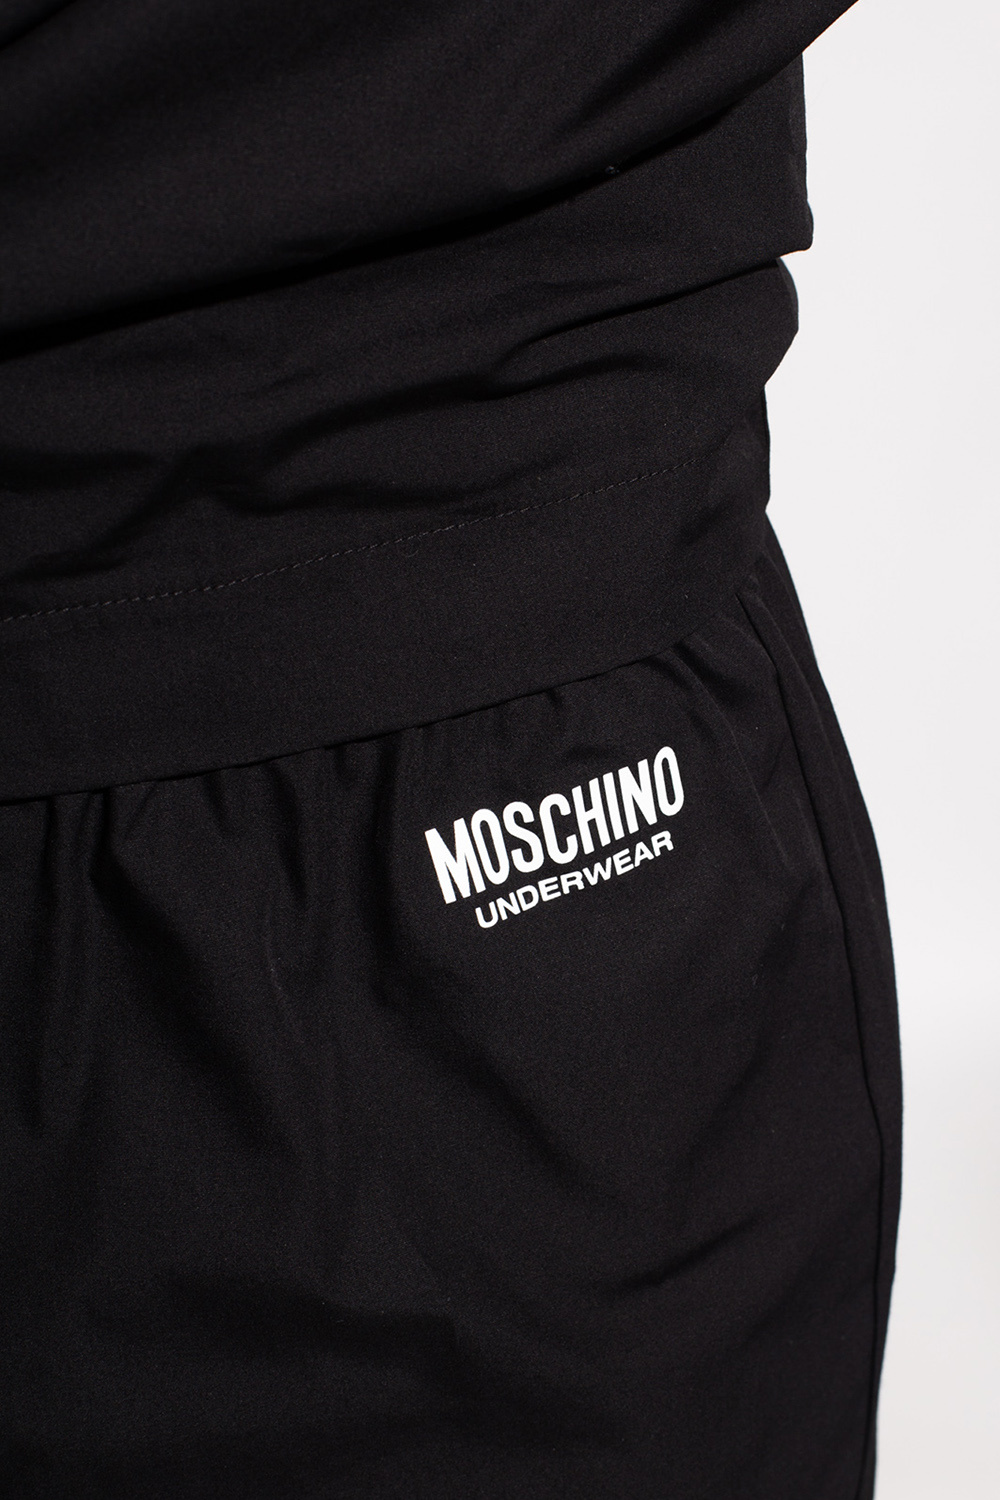 Moschino Underwear LEGGINGS - Pyjama bottoms - black 